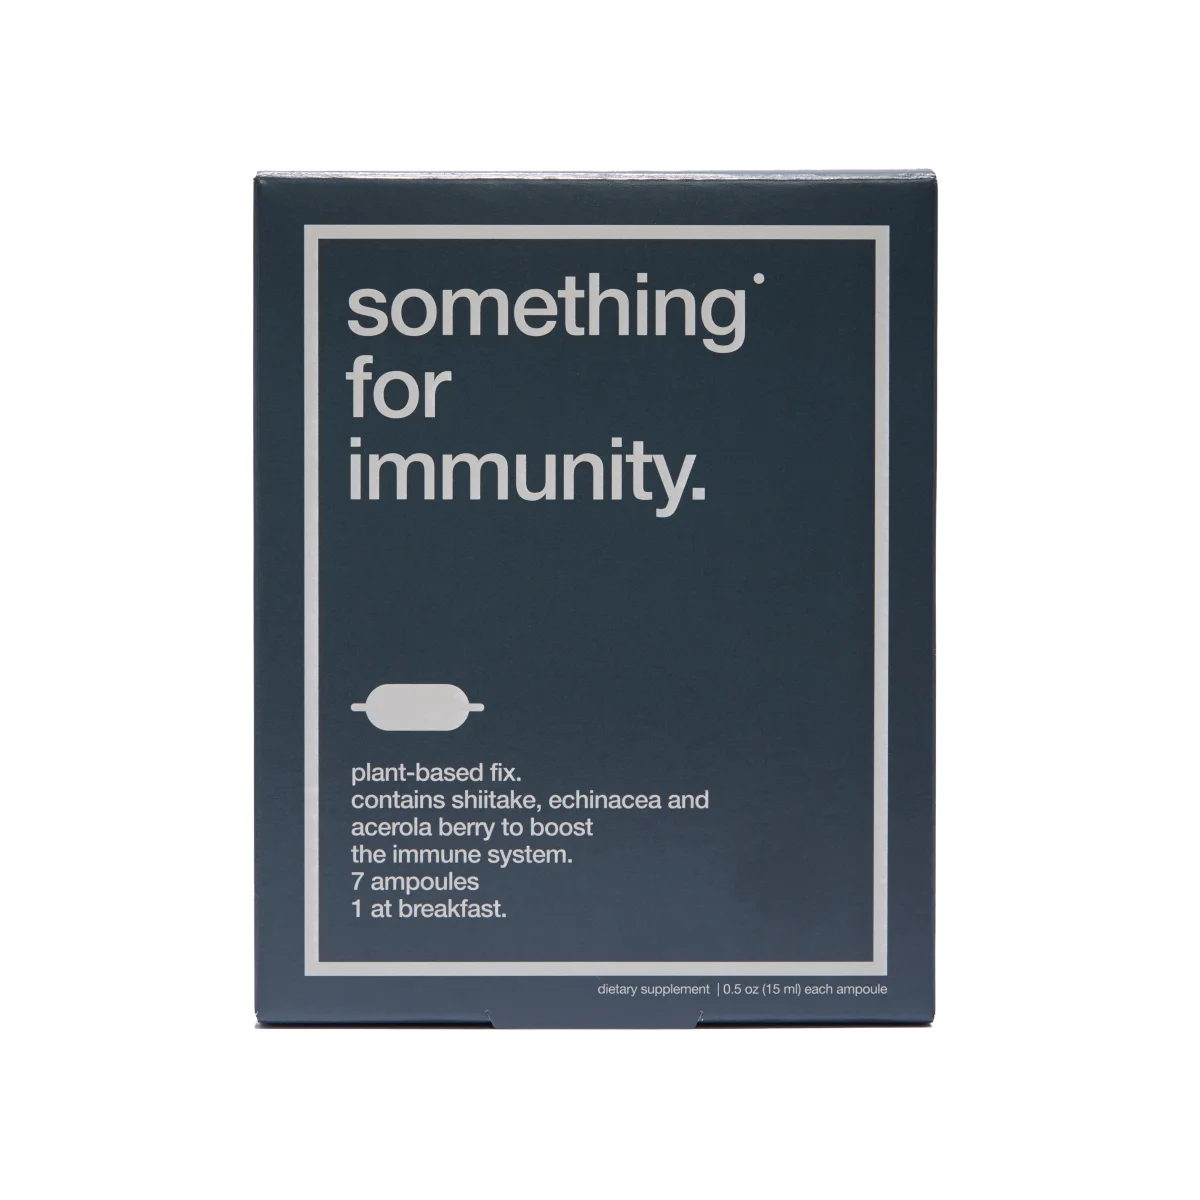 Biocollabs-immuunsuse-something for immunity.webp